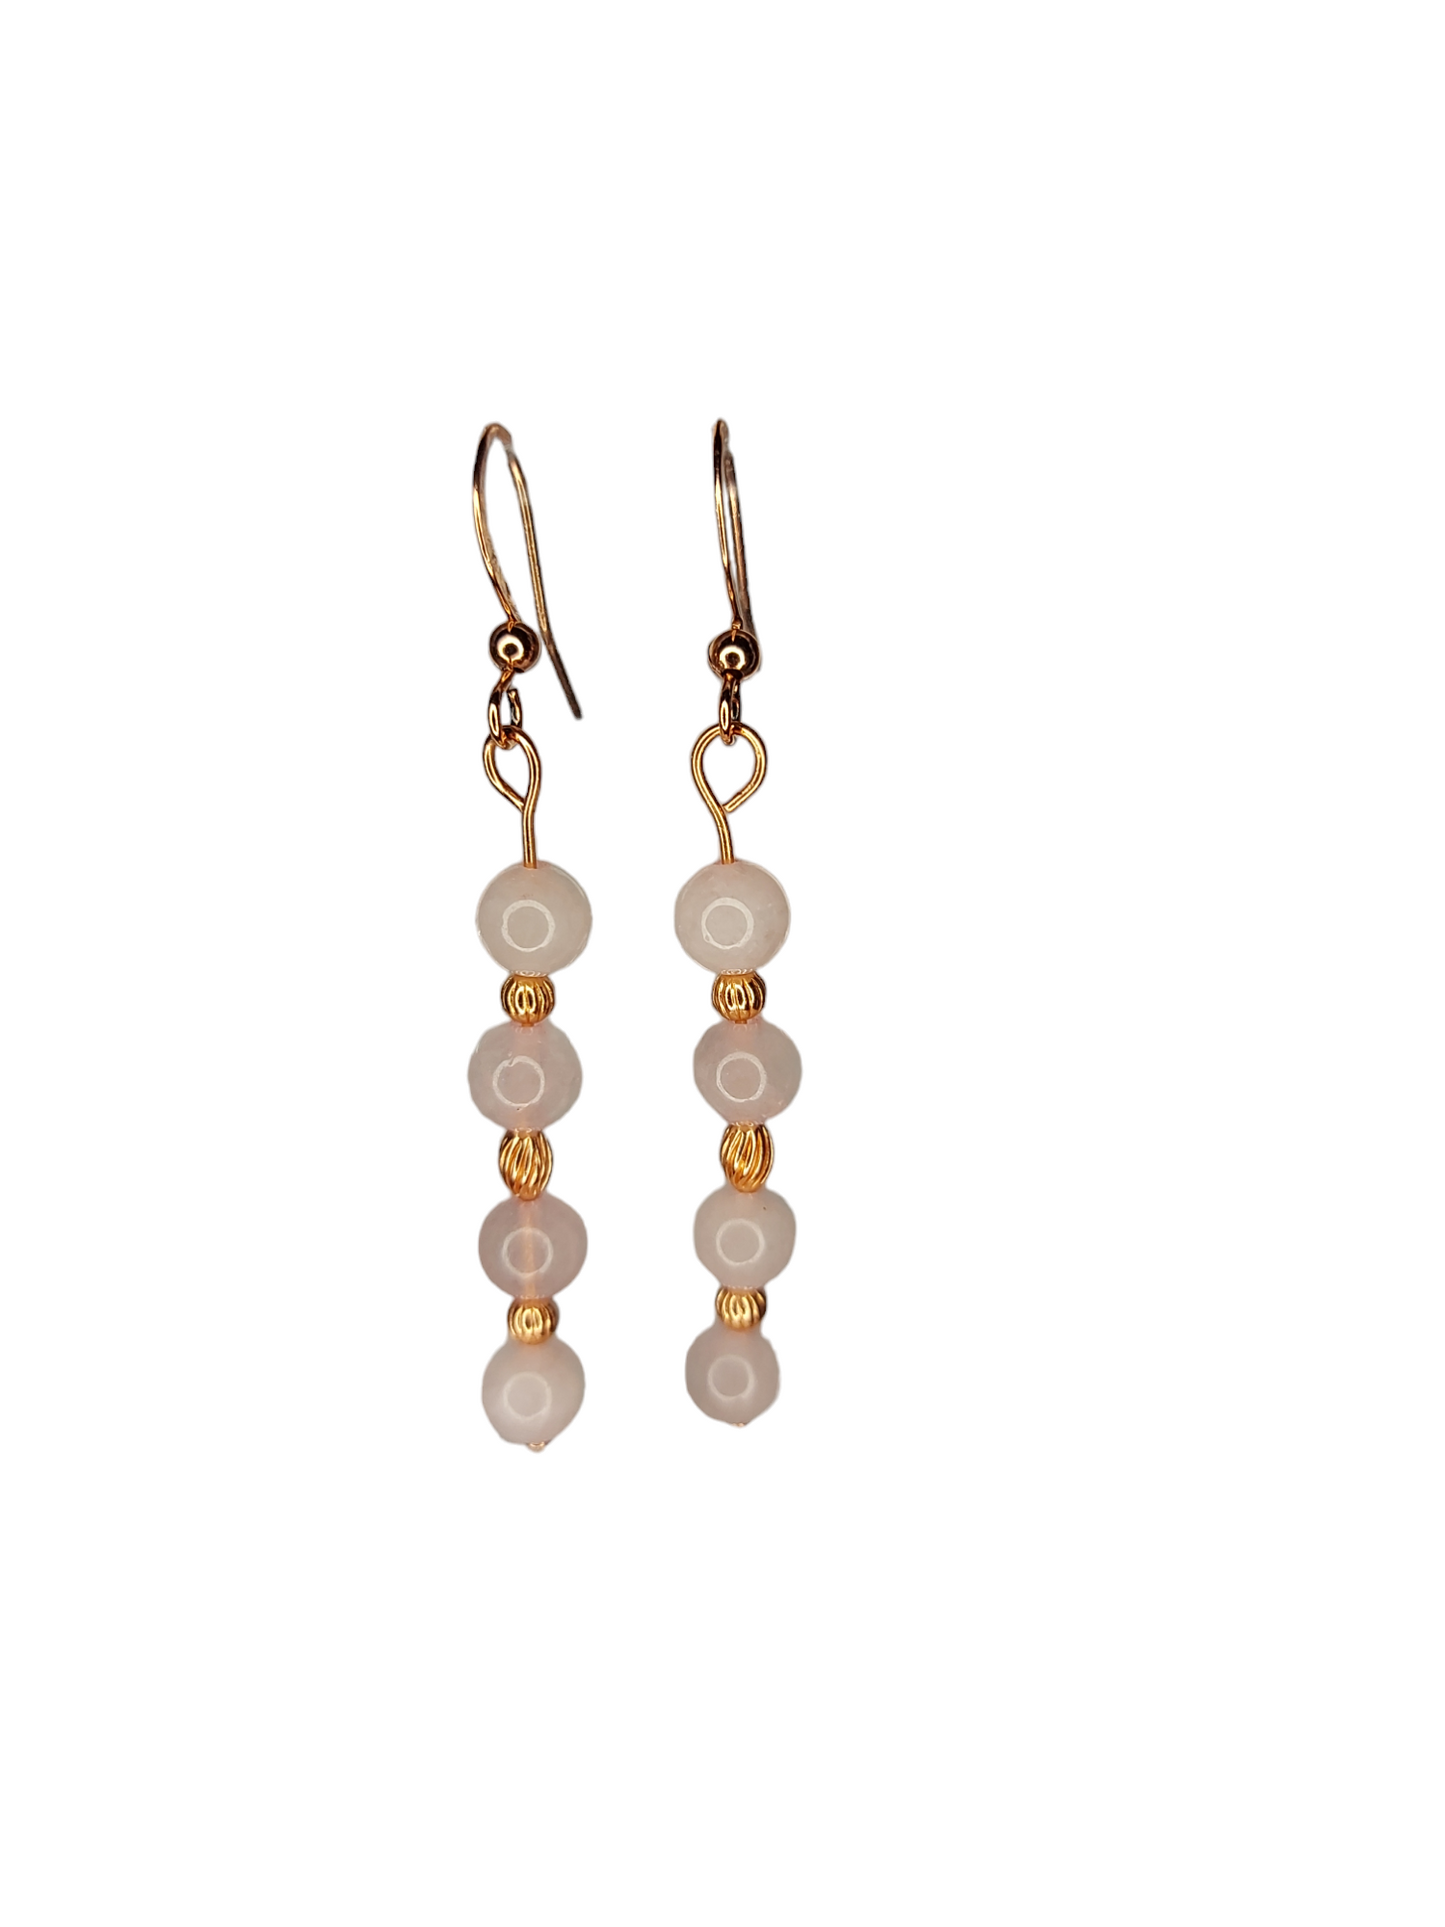 Copper Earrings with Semiprecious Gemstones